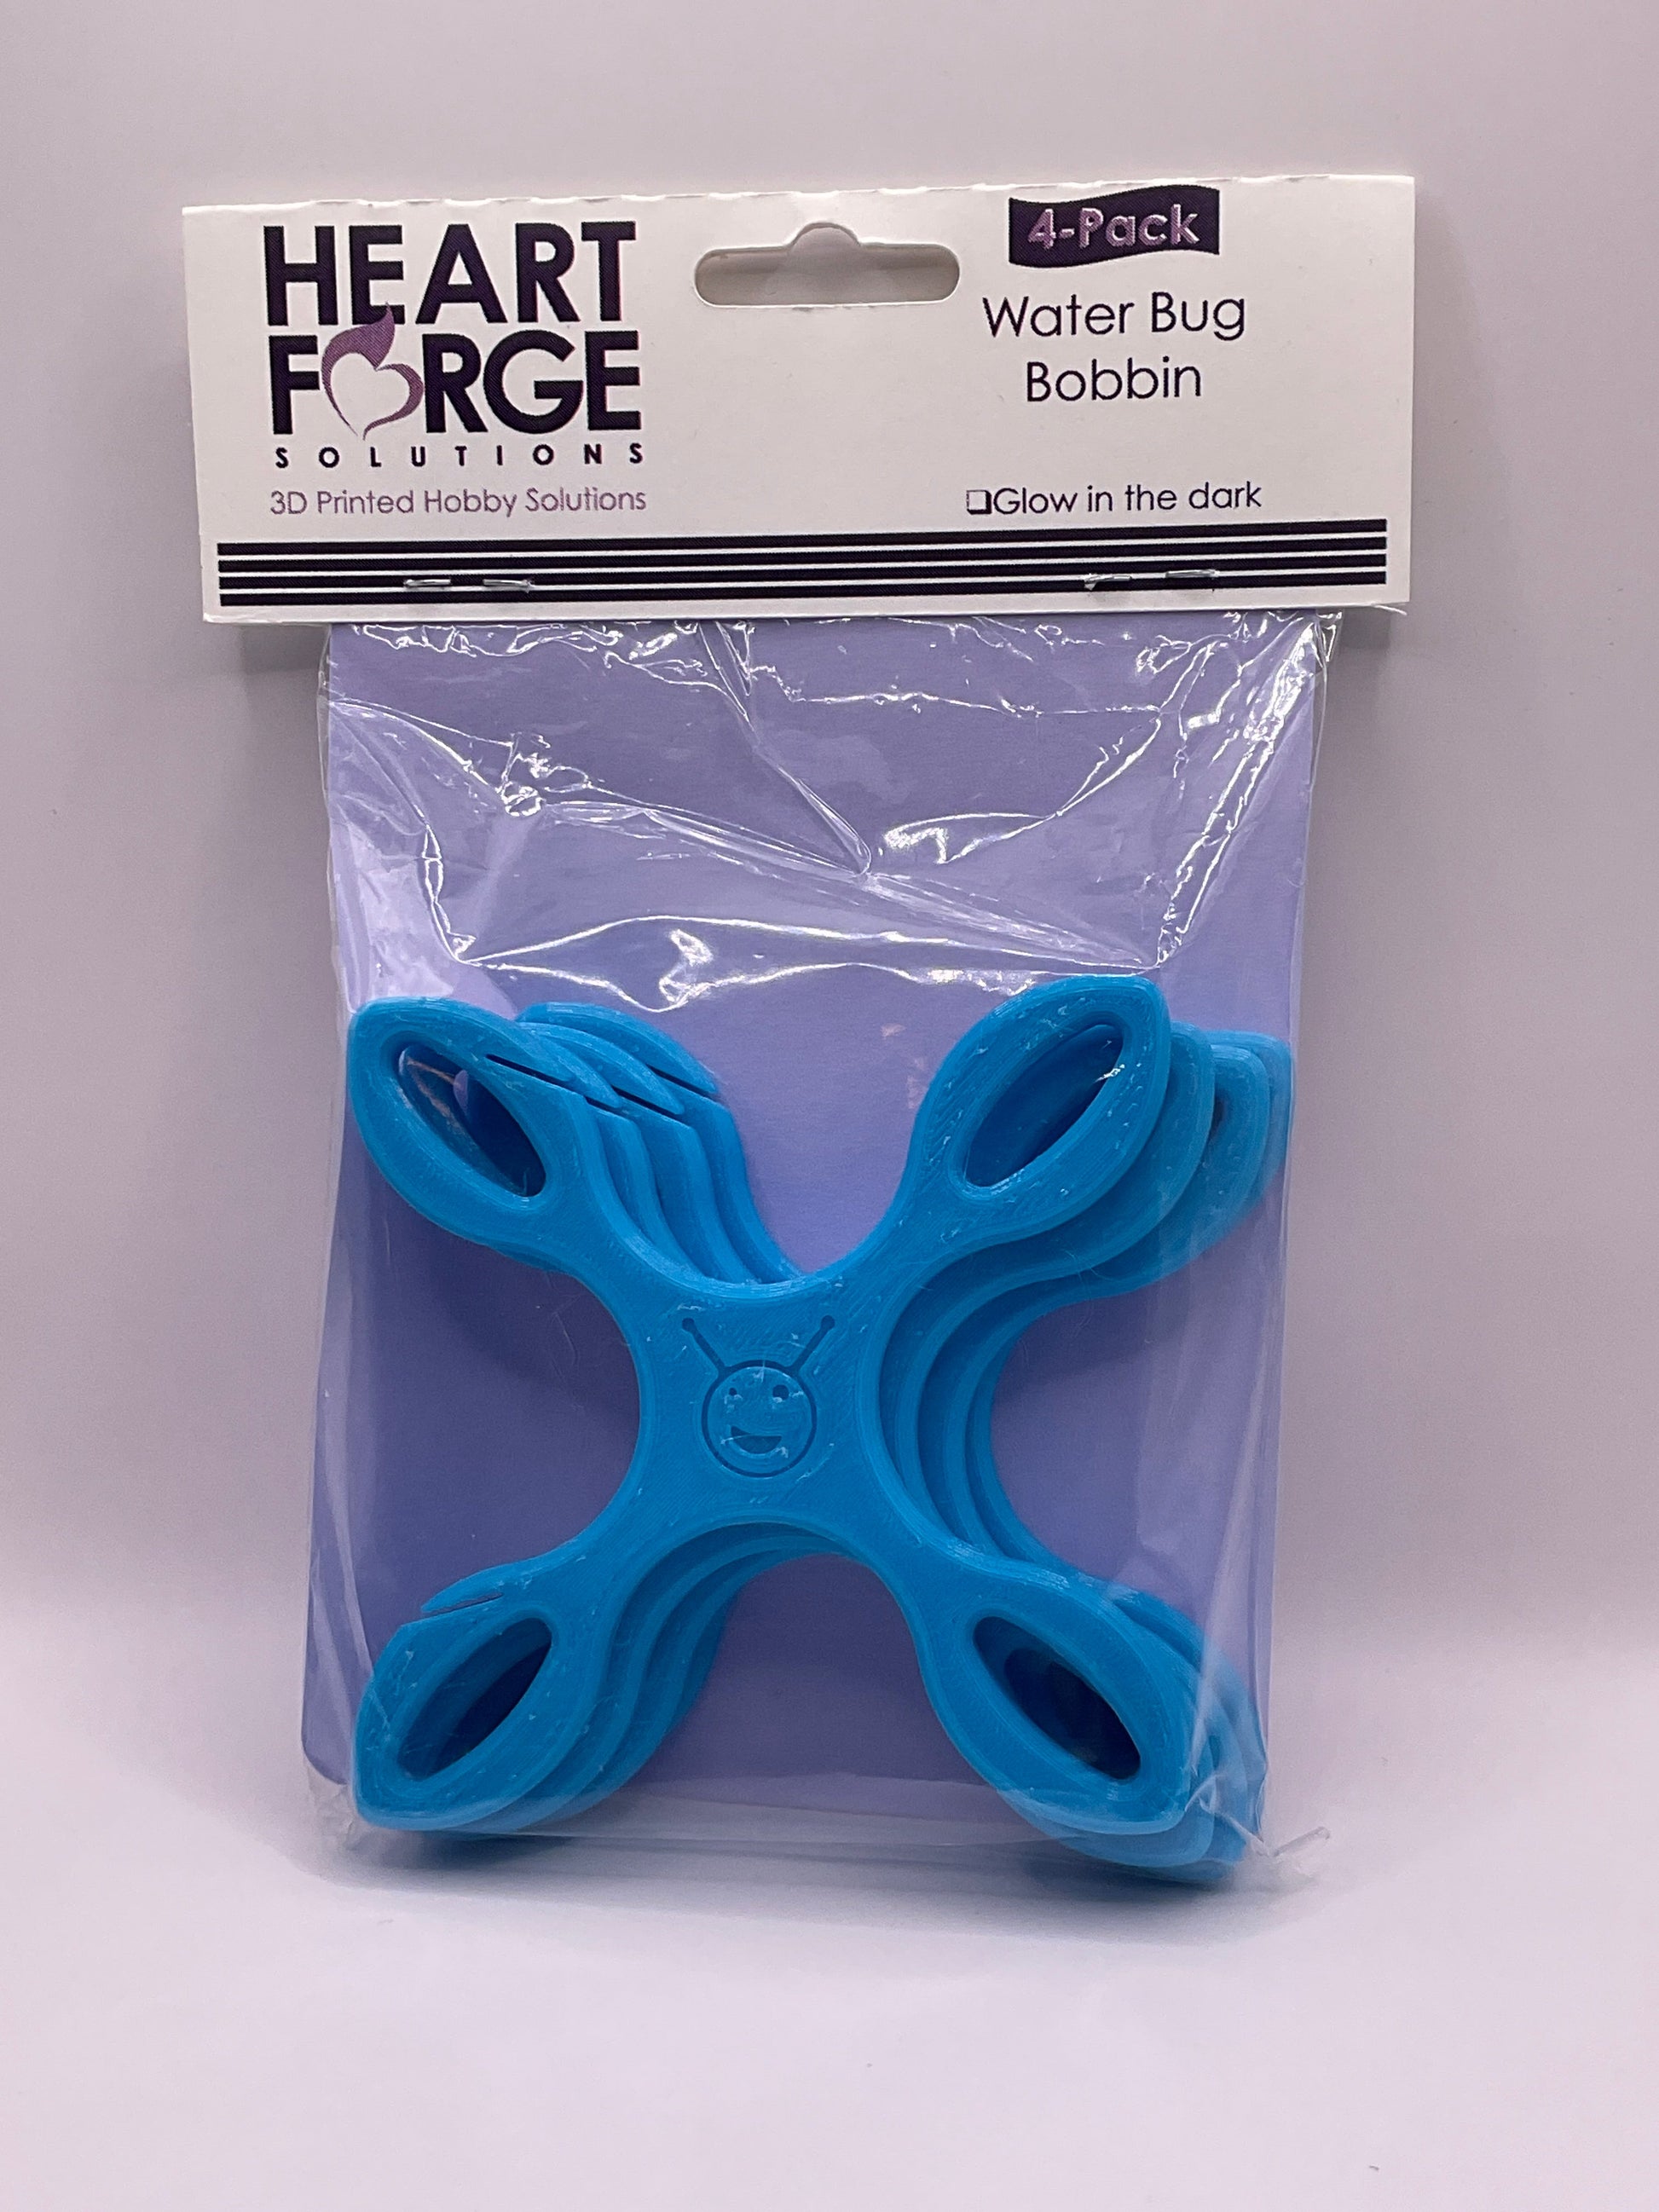 Waterbug Bobbin (Drop Bobbin) (4 pack) Heart Forge Solutions